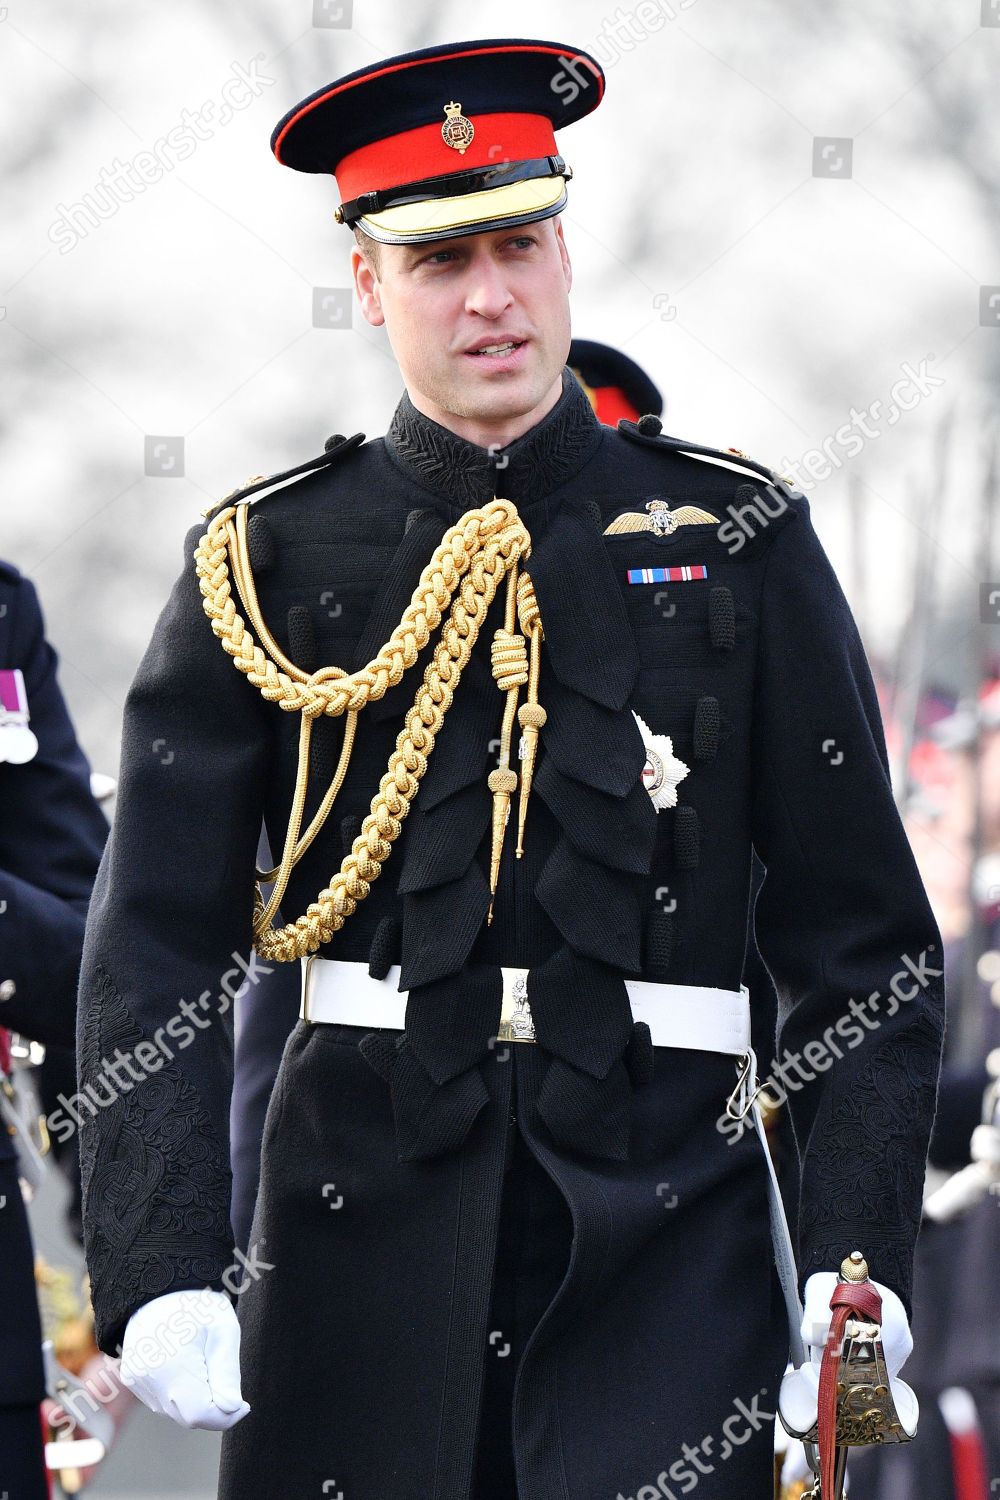 sovereigns-parade-at-the-royal-military-academy-sandhurst-berkshire-uk-shutterstock-editorial-10033849v.jpg